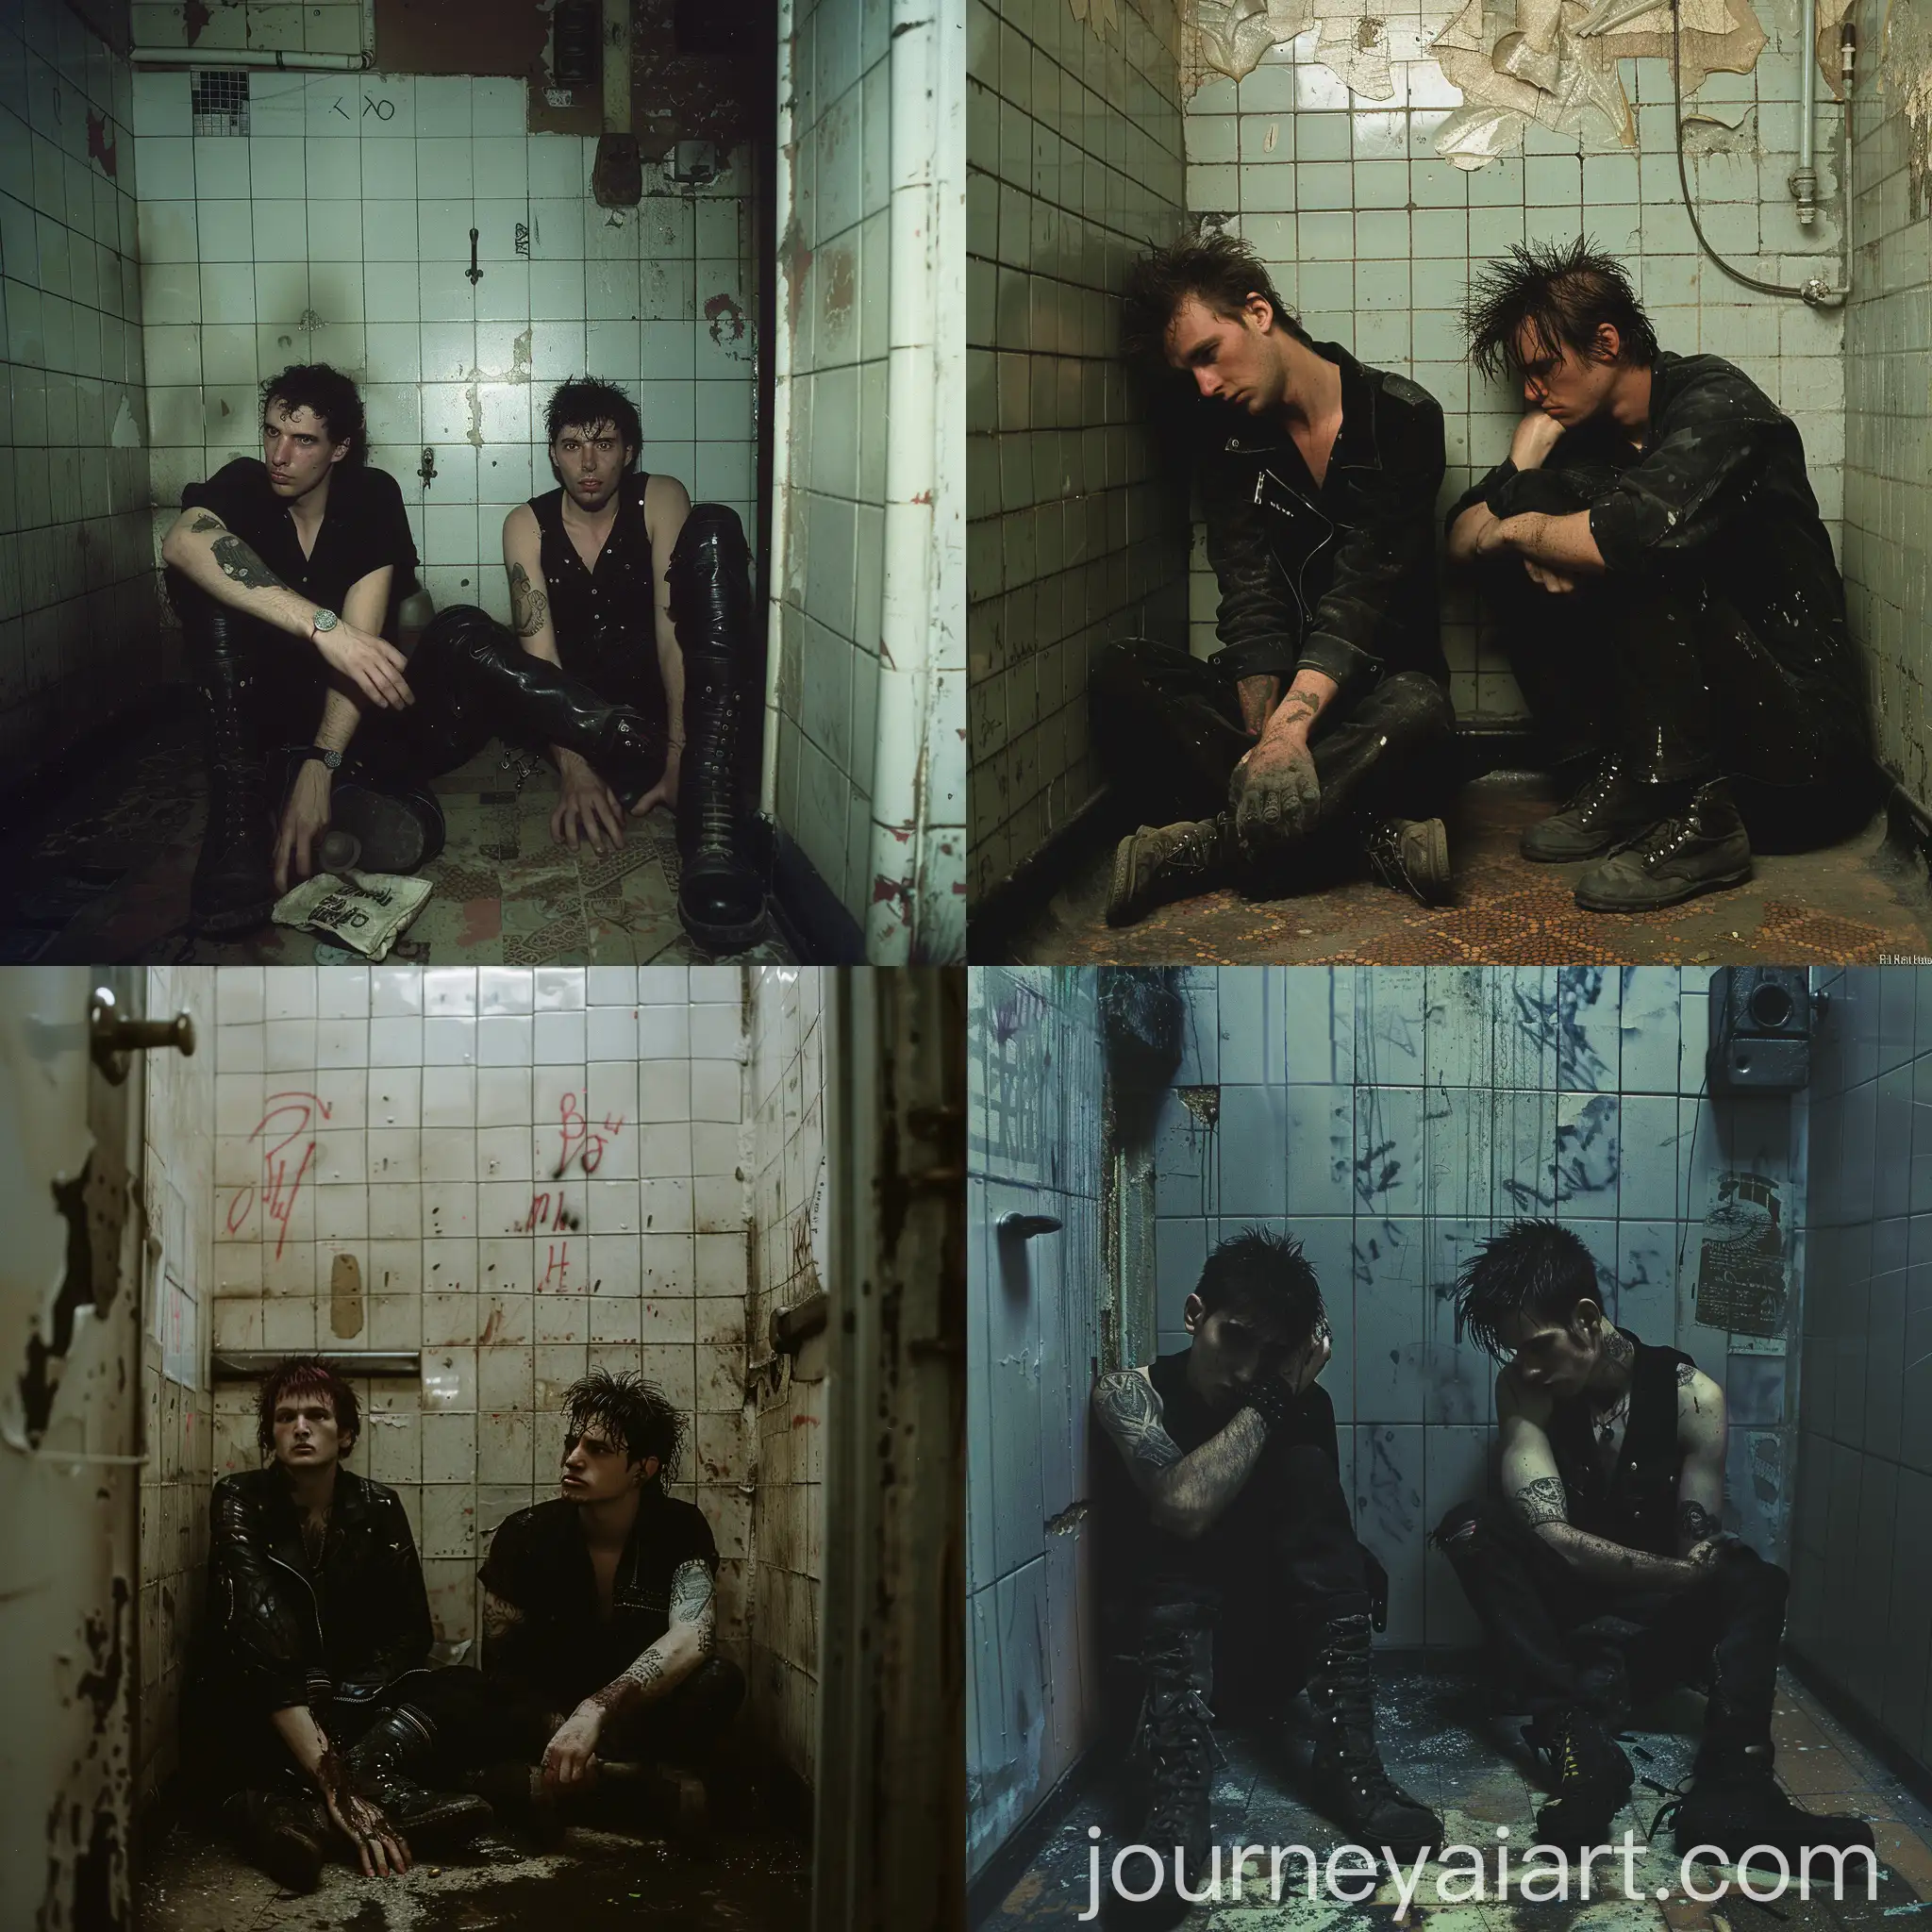 Two-Punks-Sitting-in-Old-Underground-Club-Bathroom